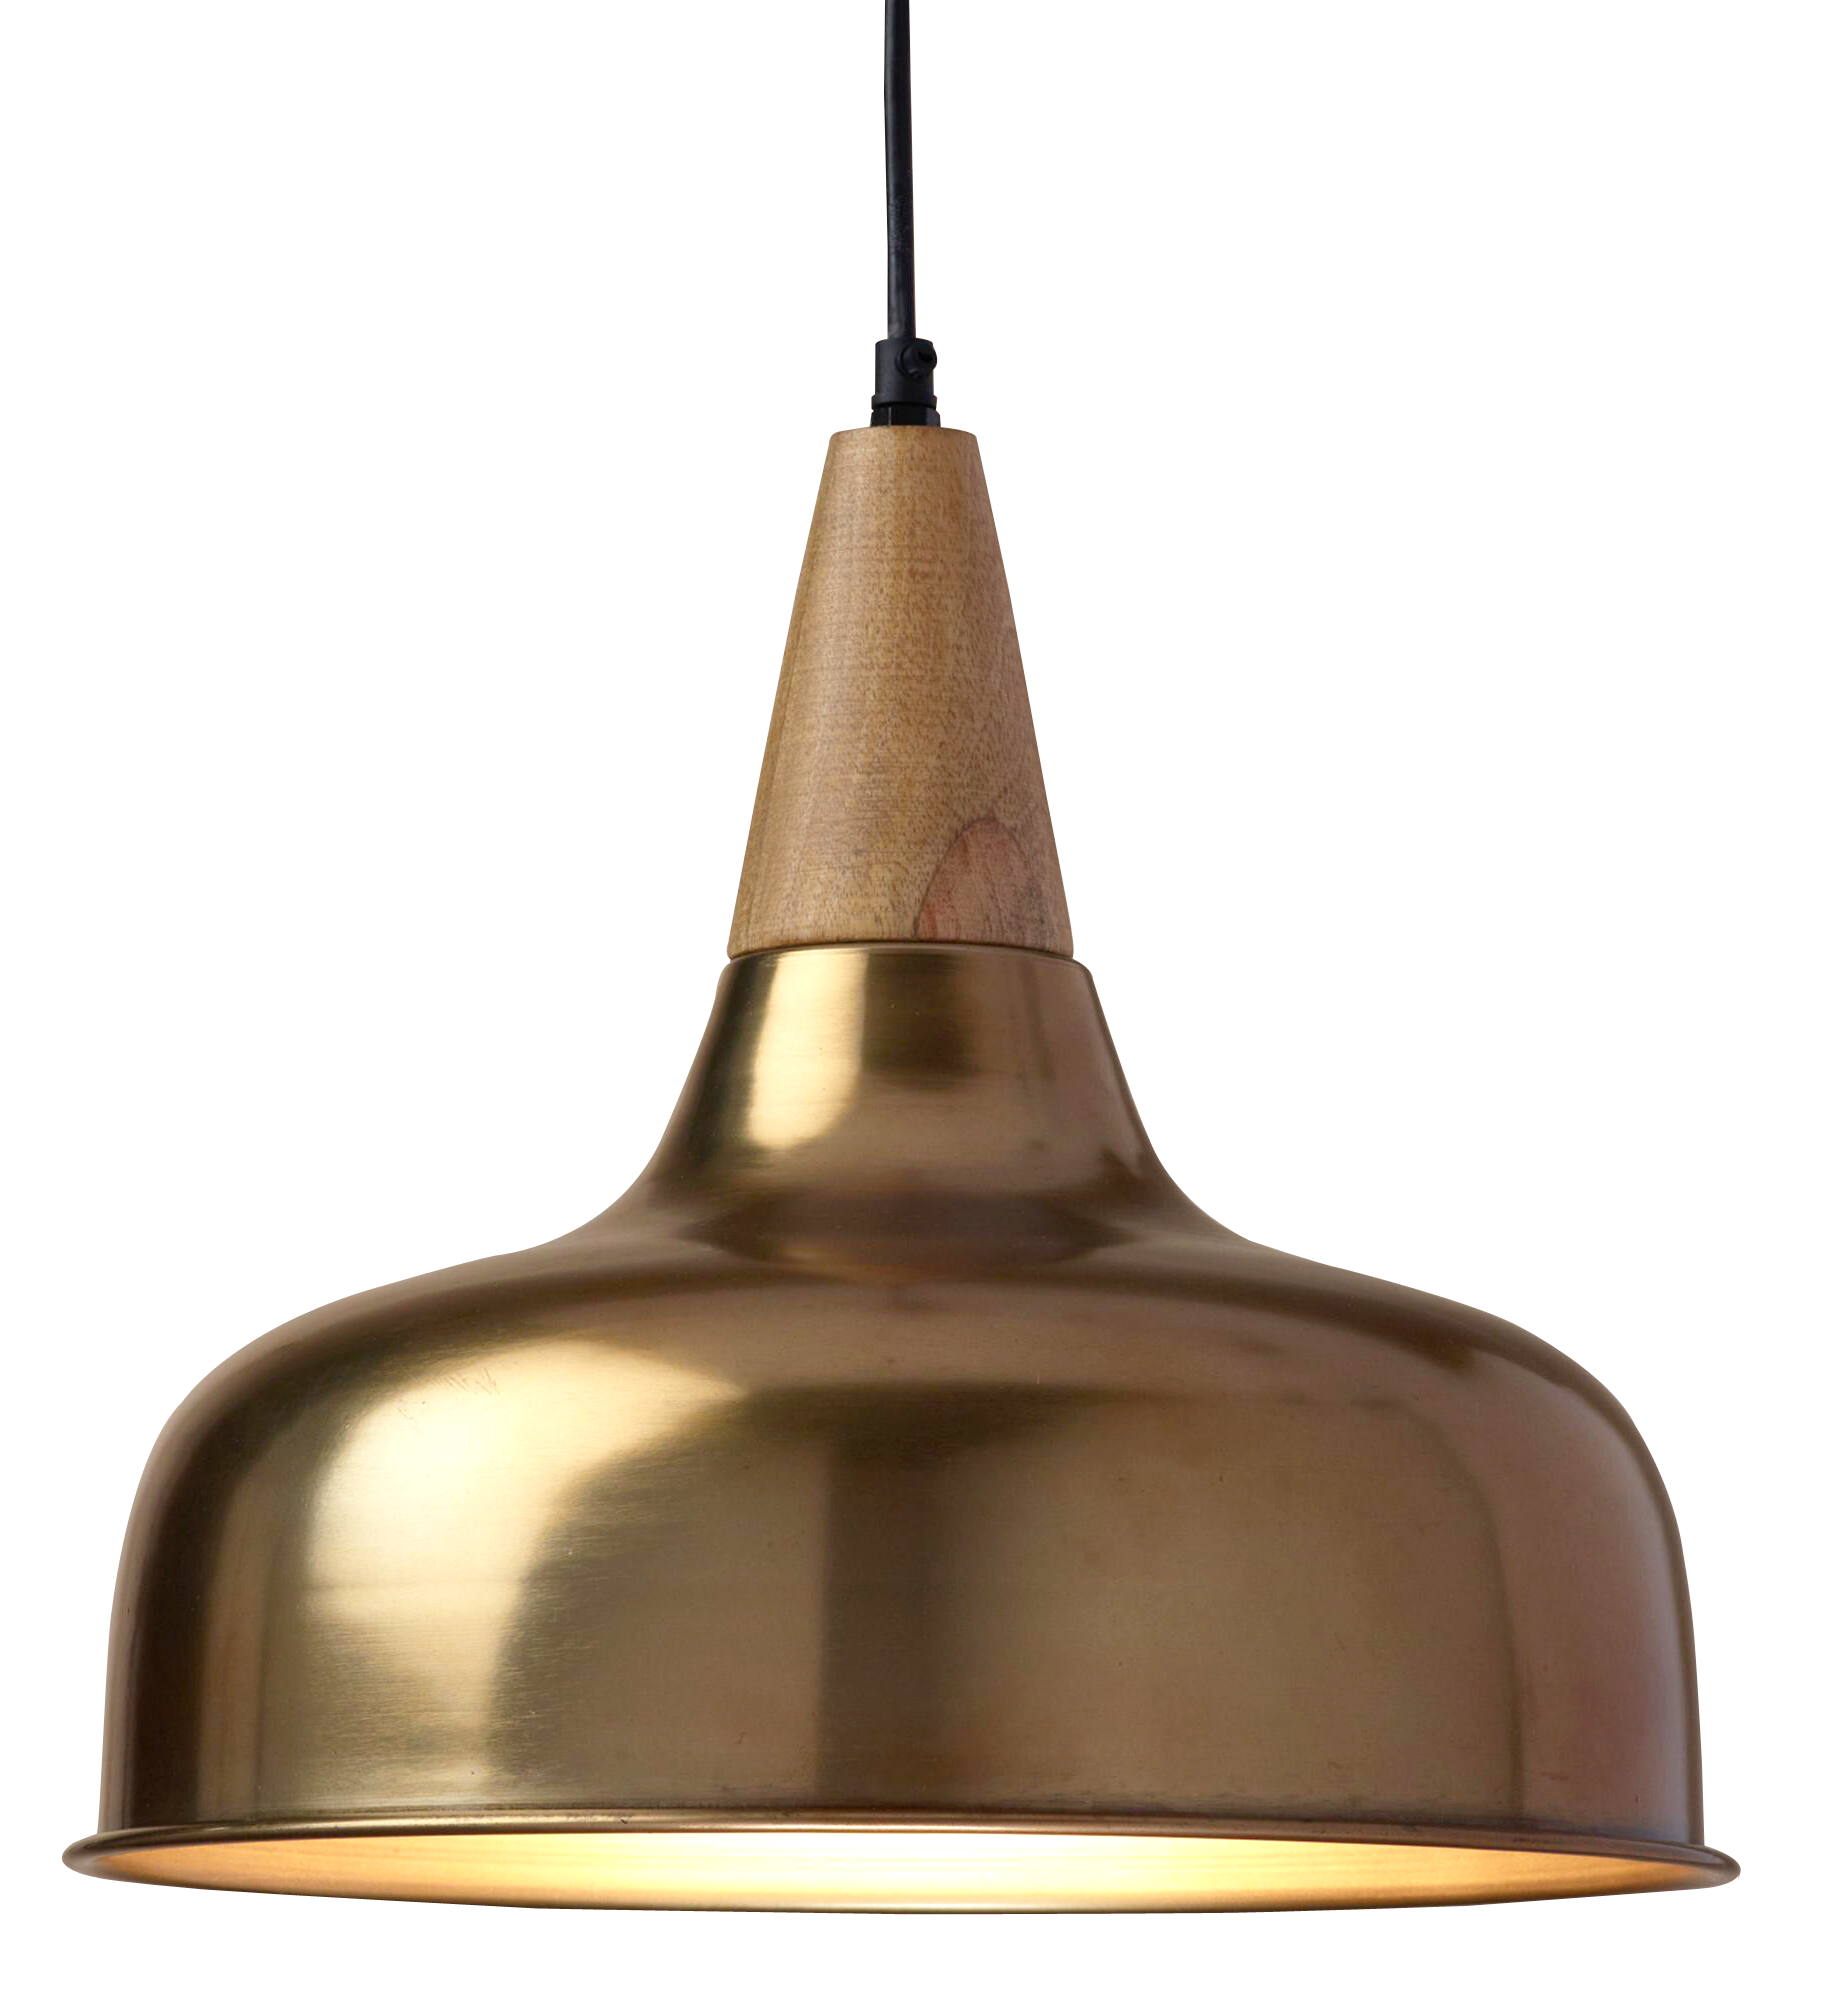 Hanging Lamp PNG Transparent Image.